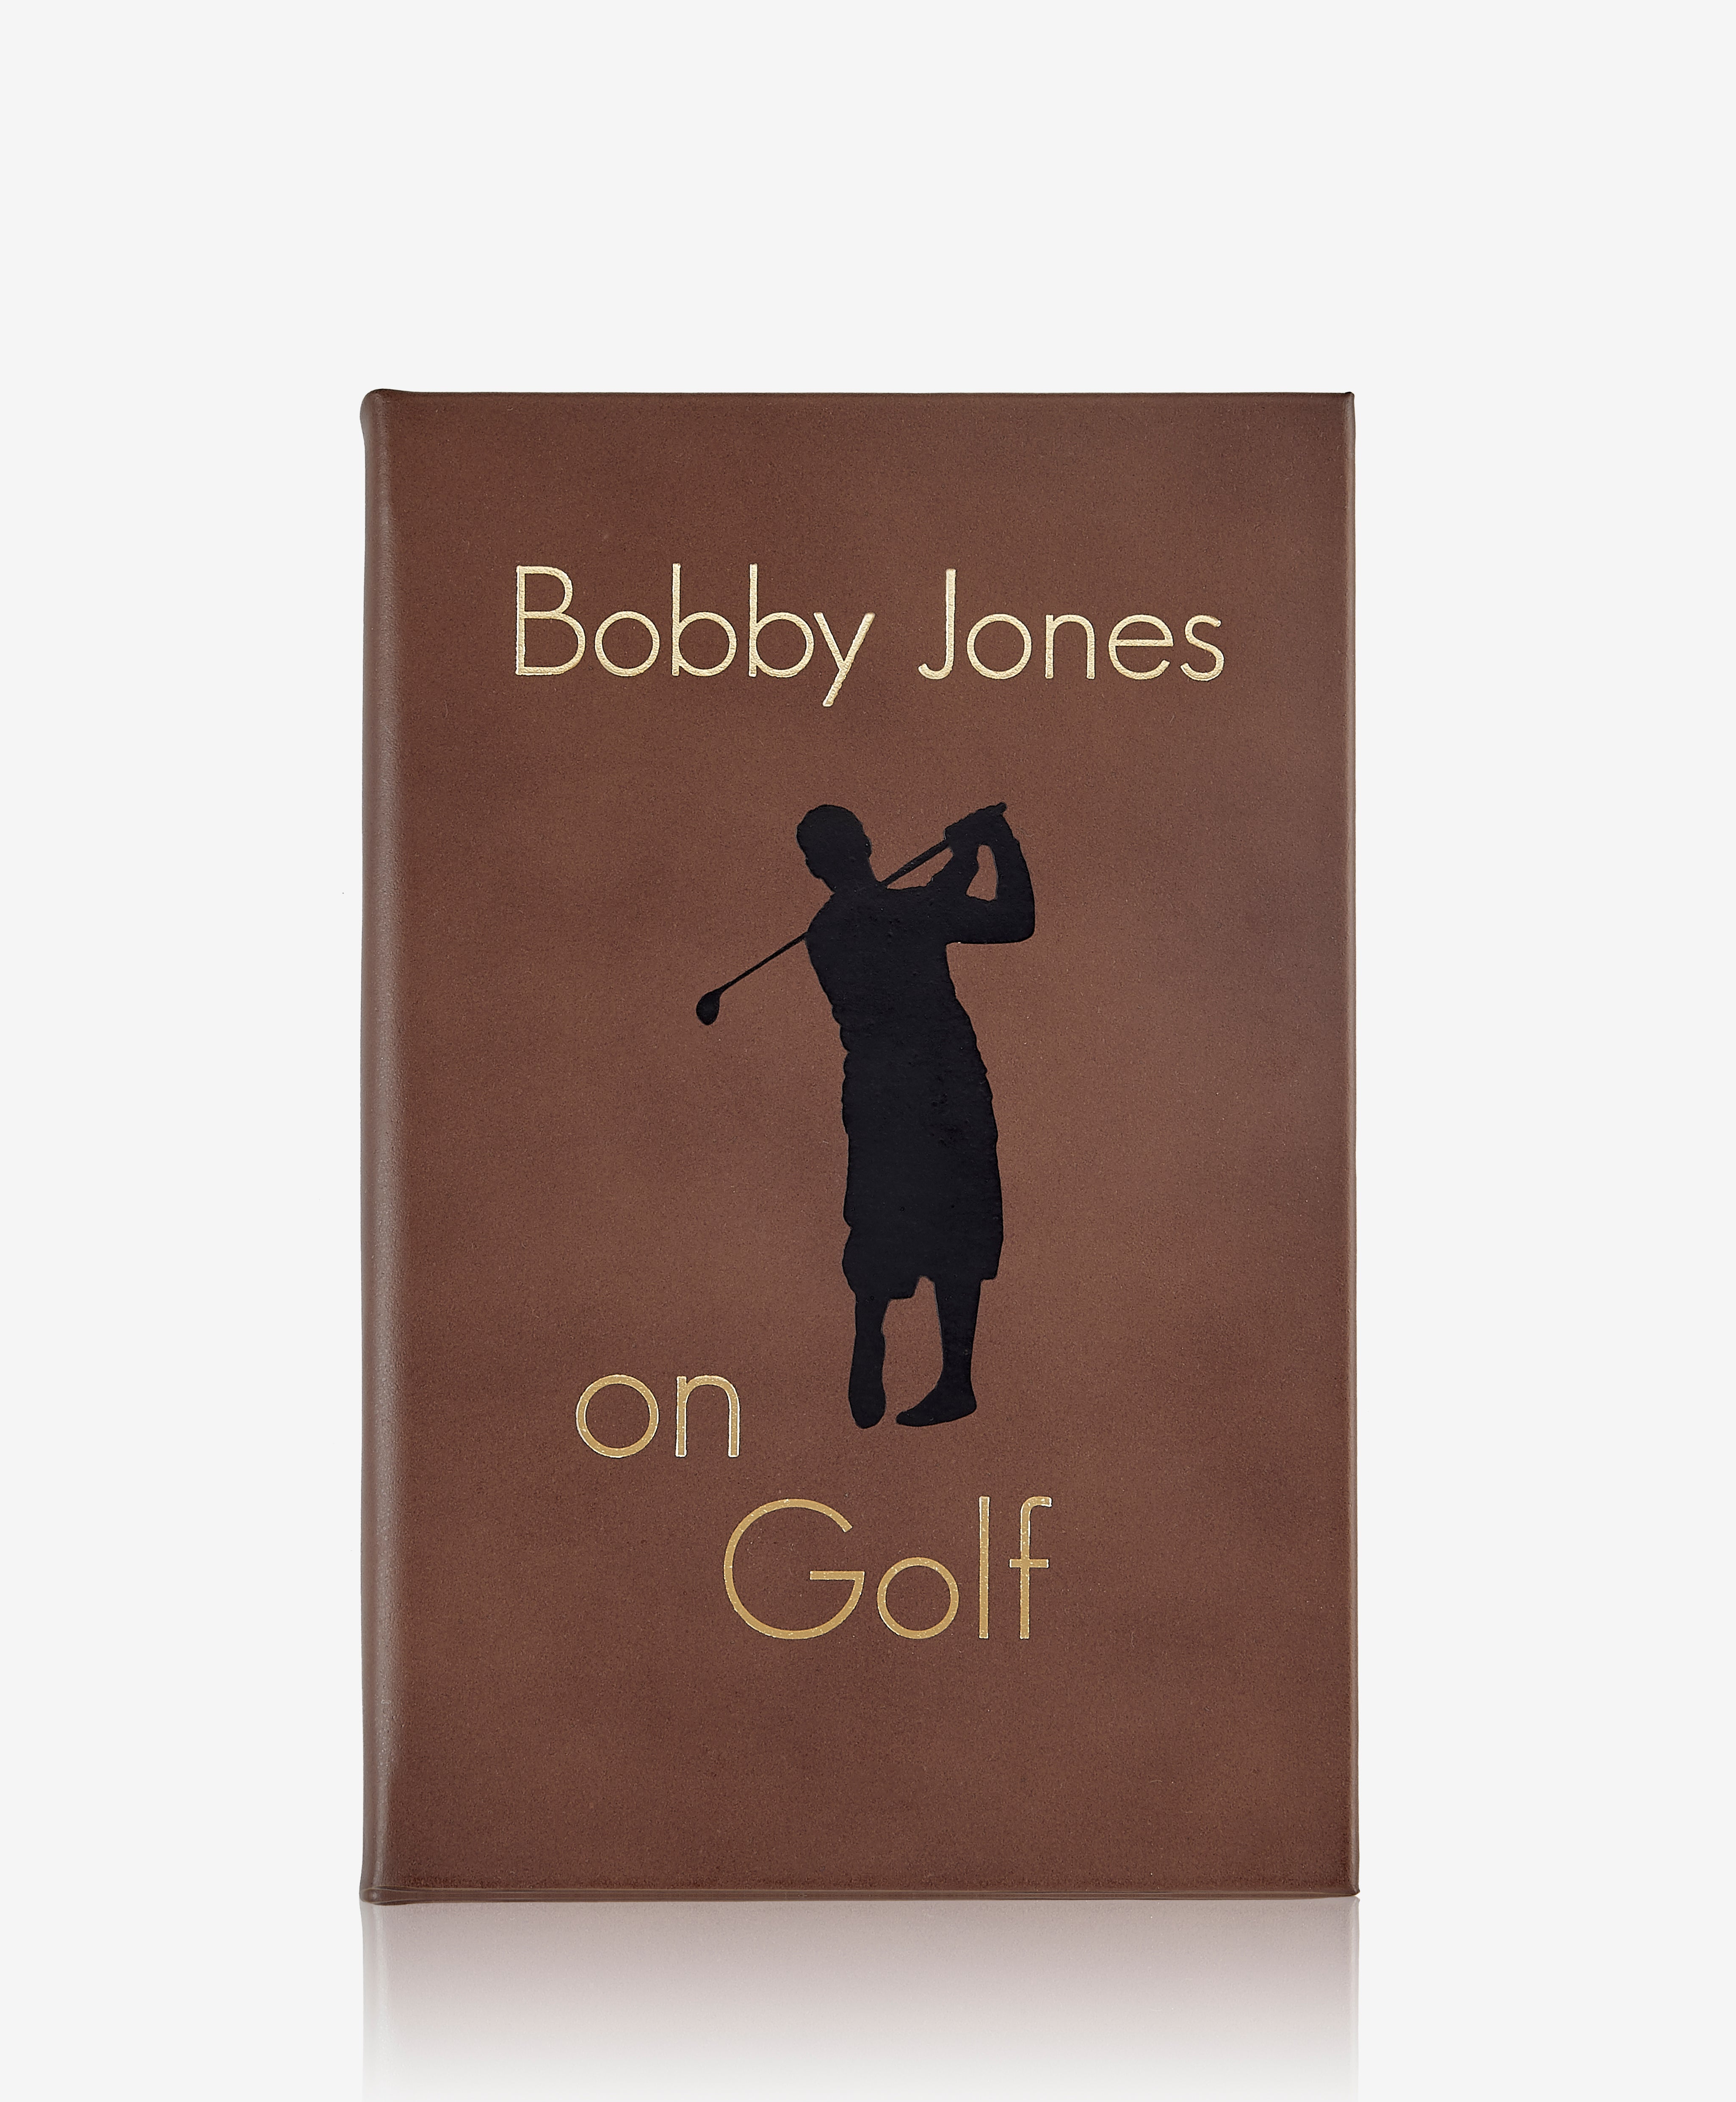 Bobby Jones on Golf